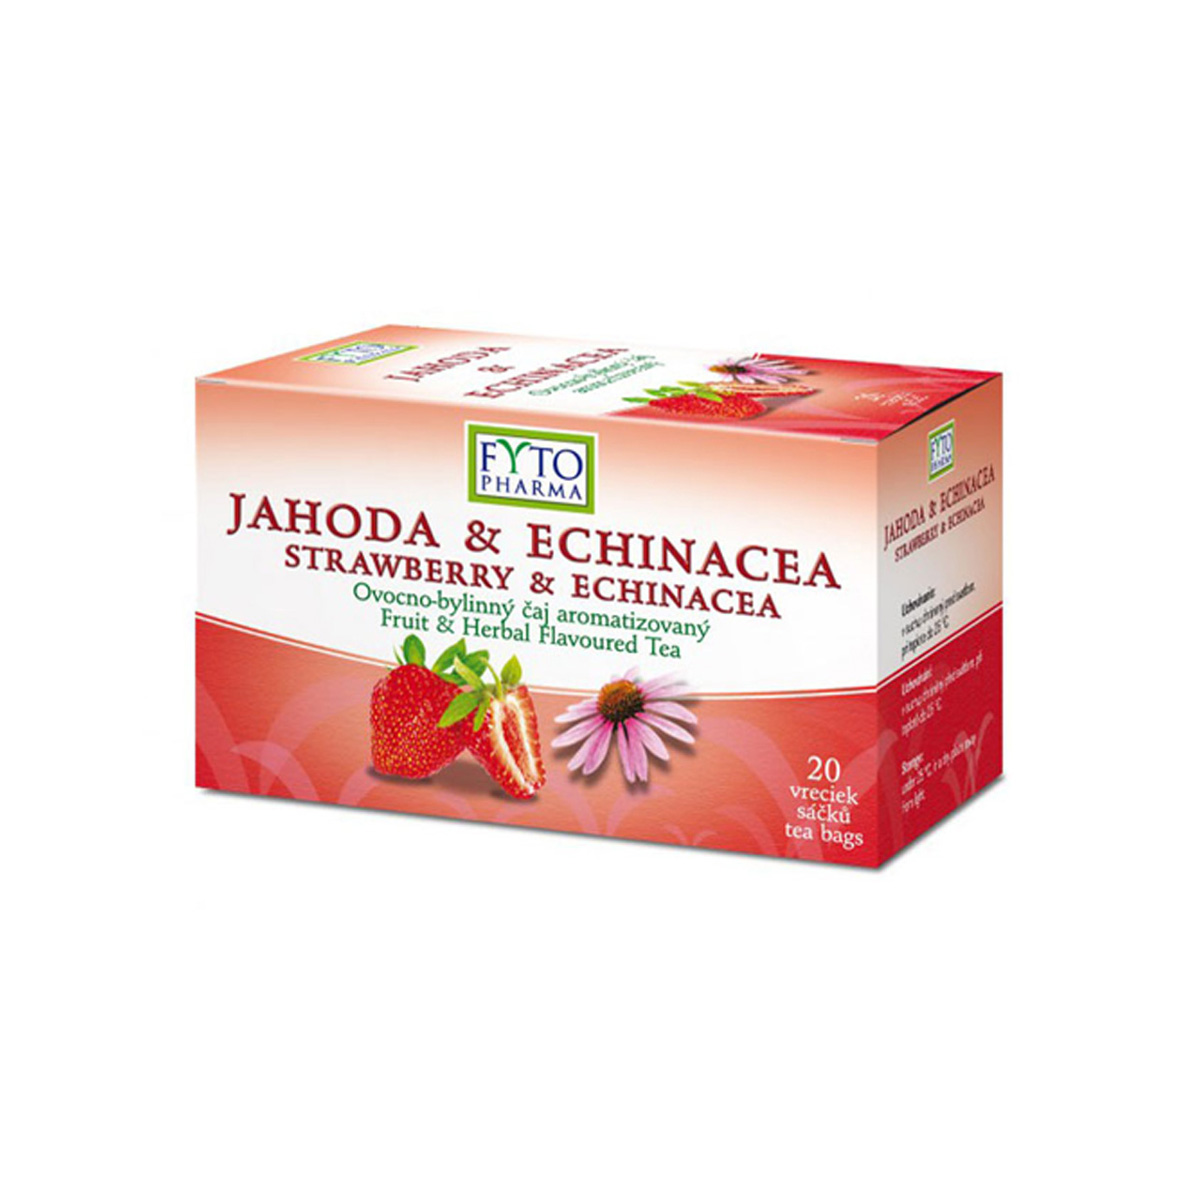 Fytopharma Ovocno-bylinný čaj jahoda & echinacea 20 x 2 g